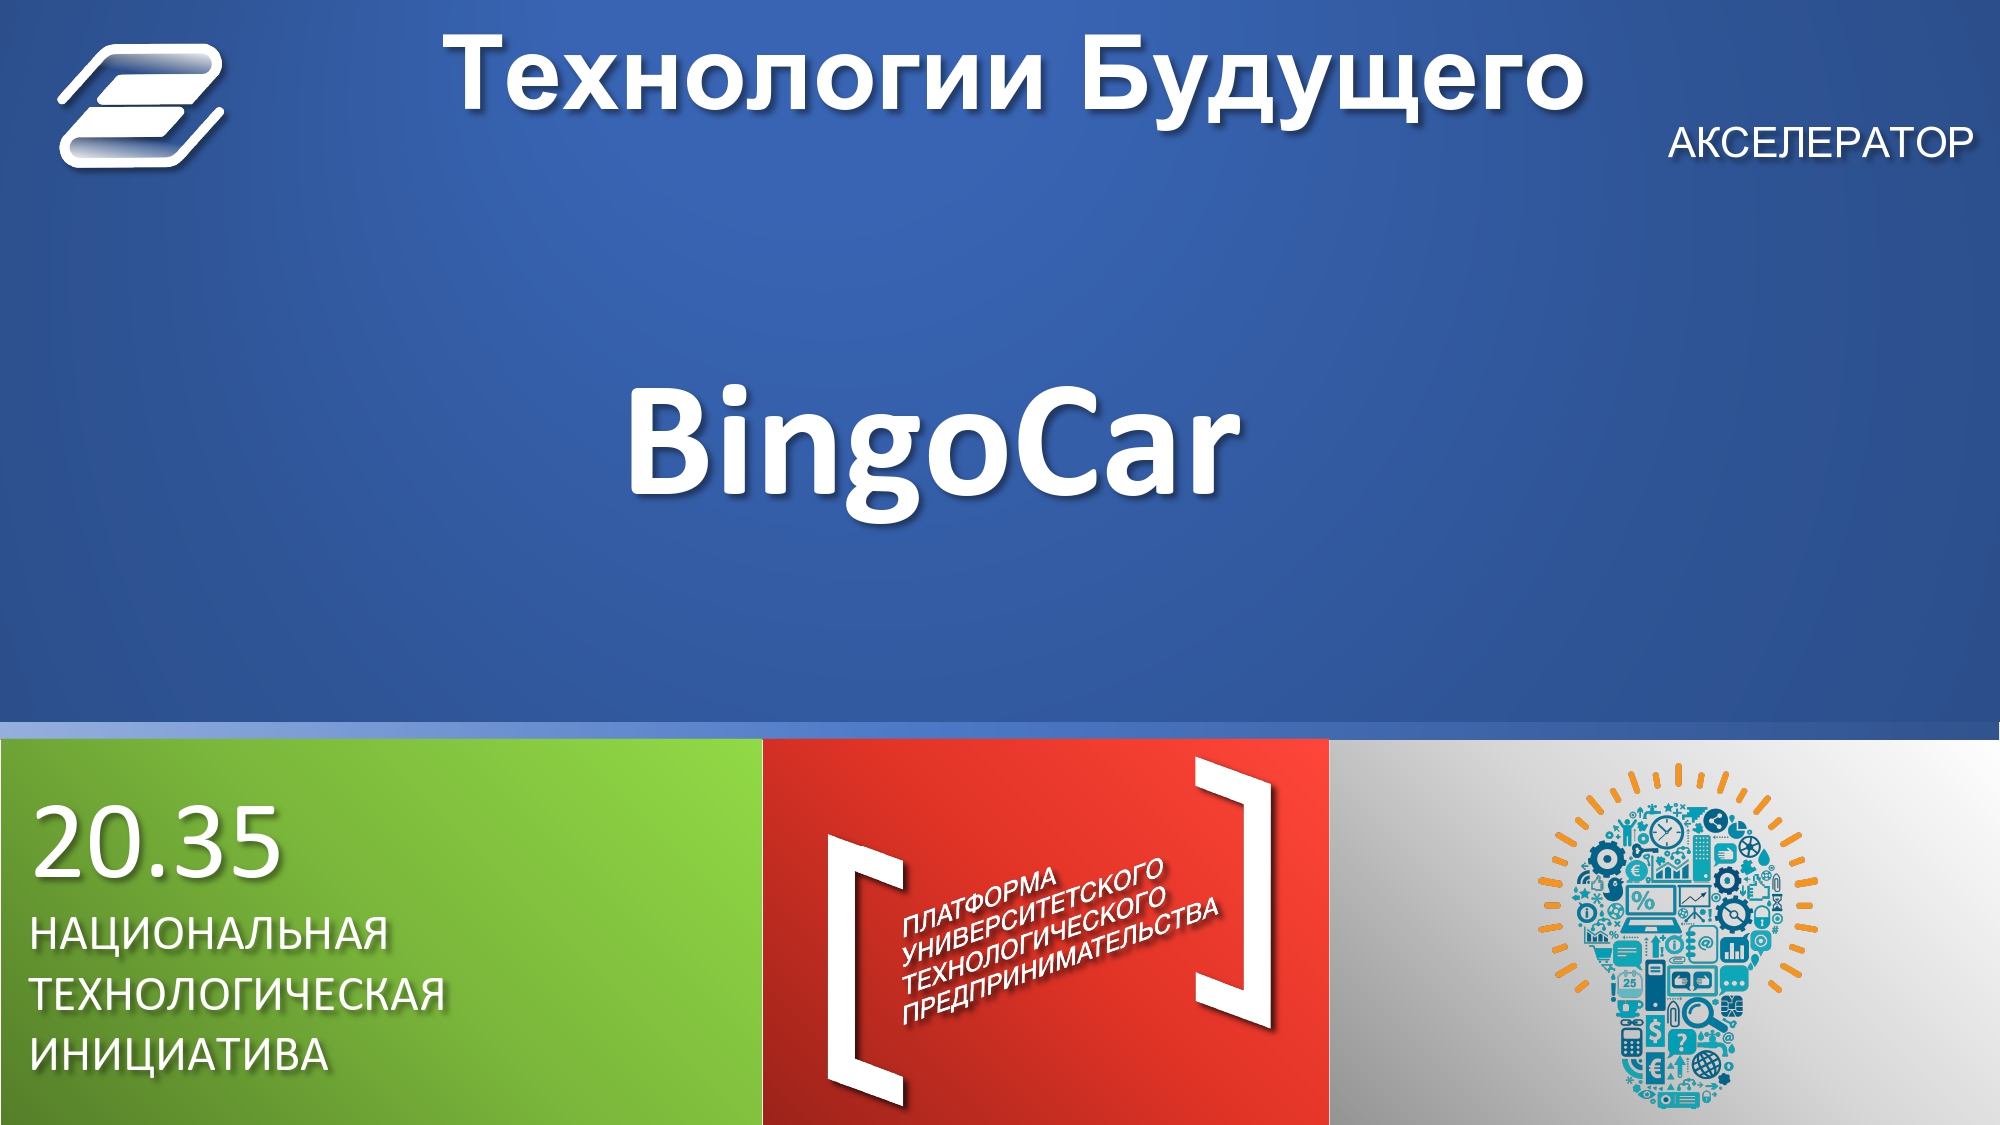 BingoCar